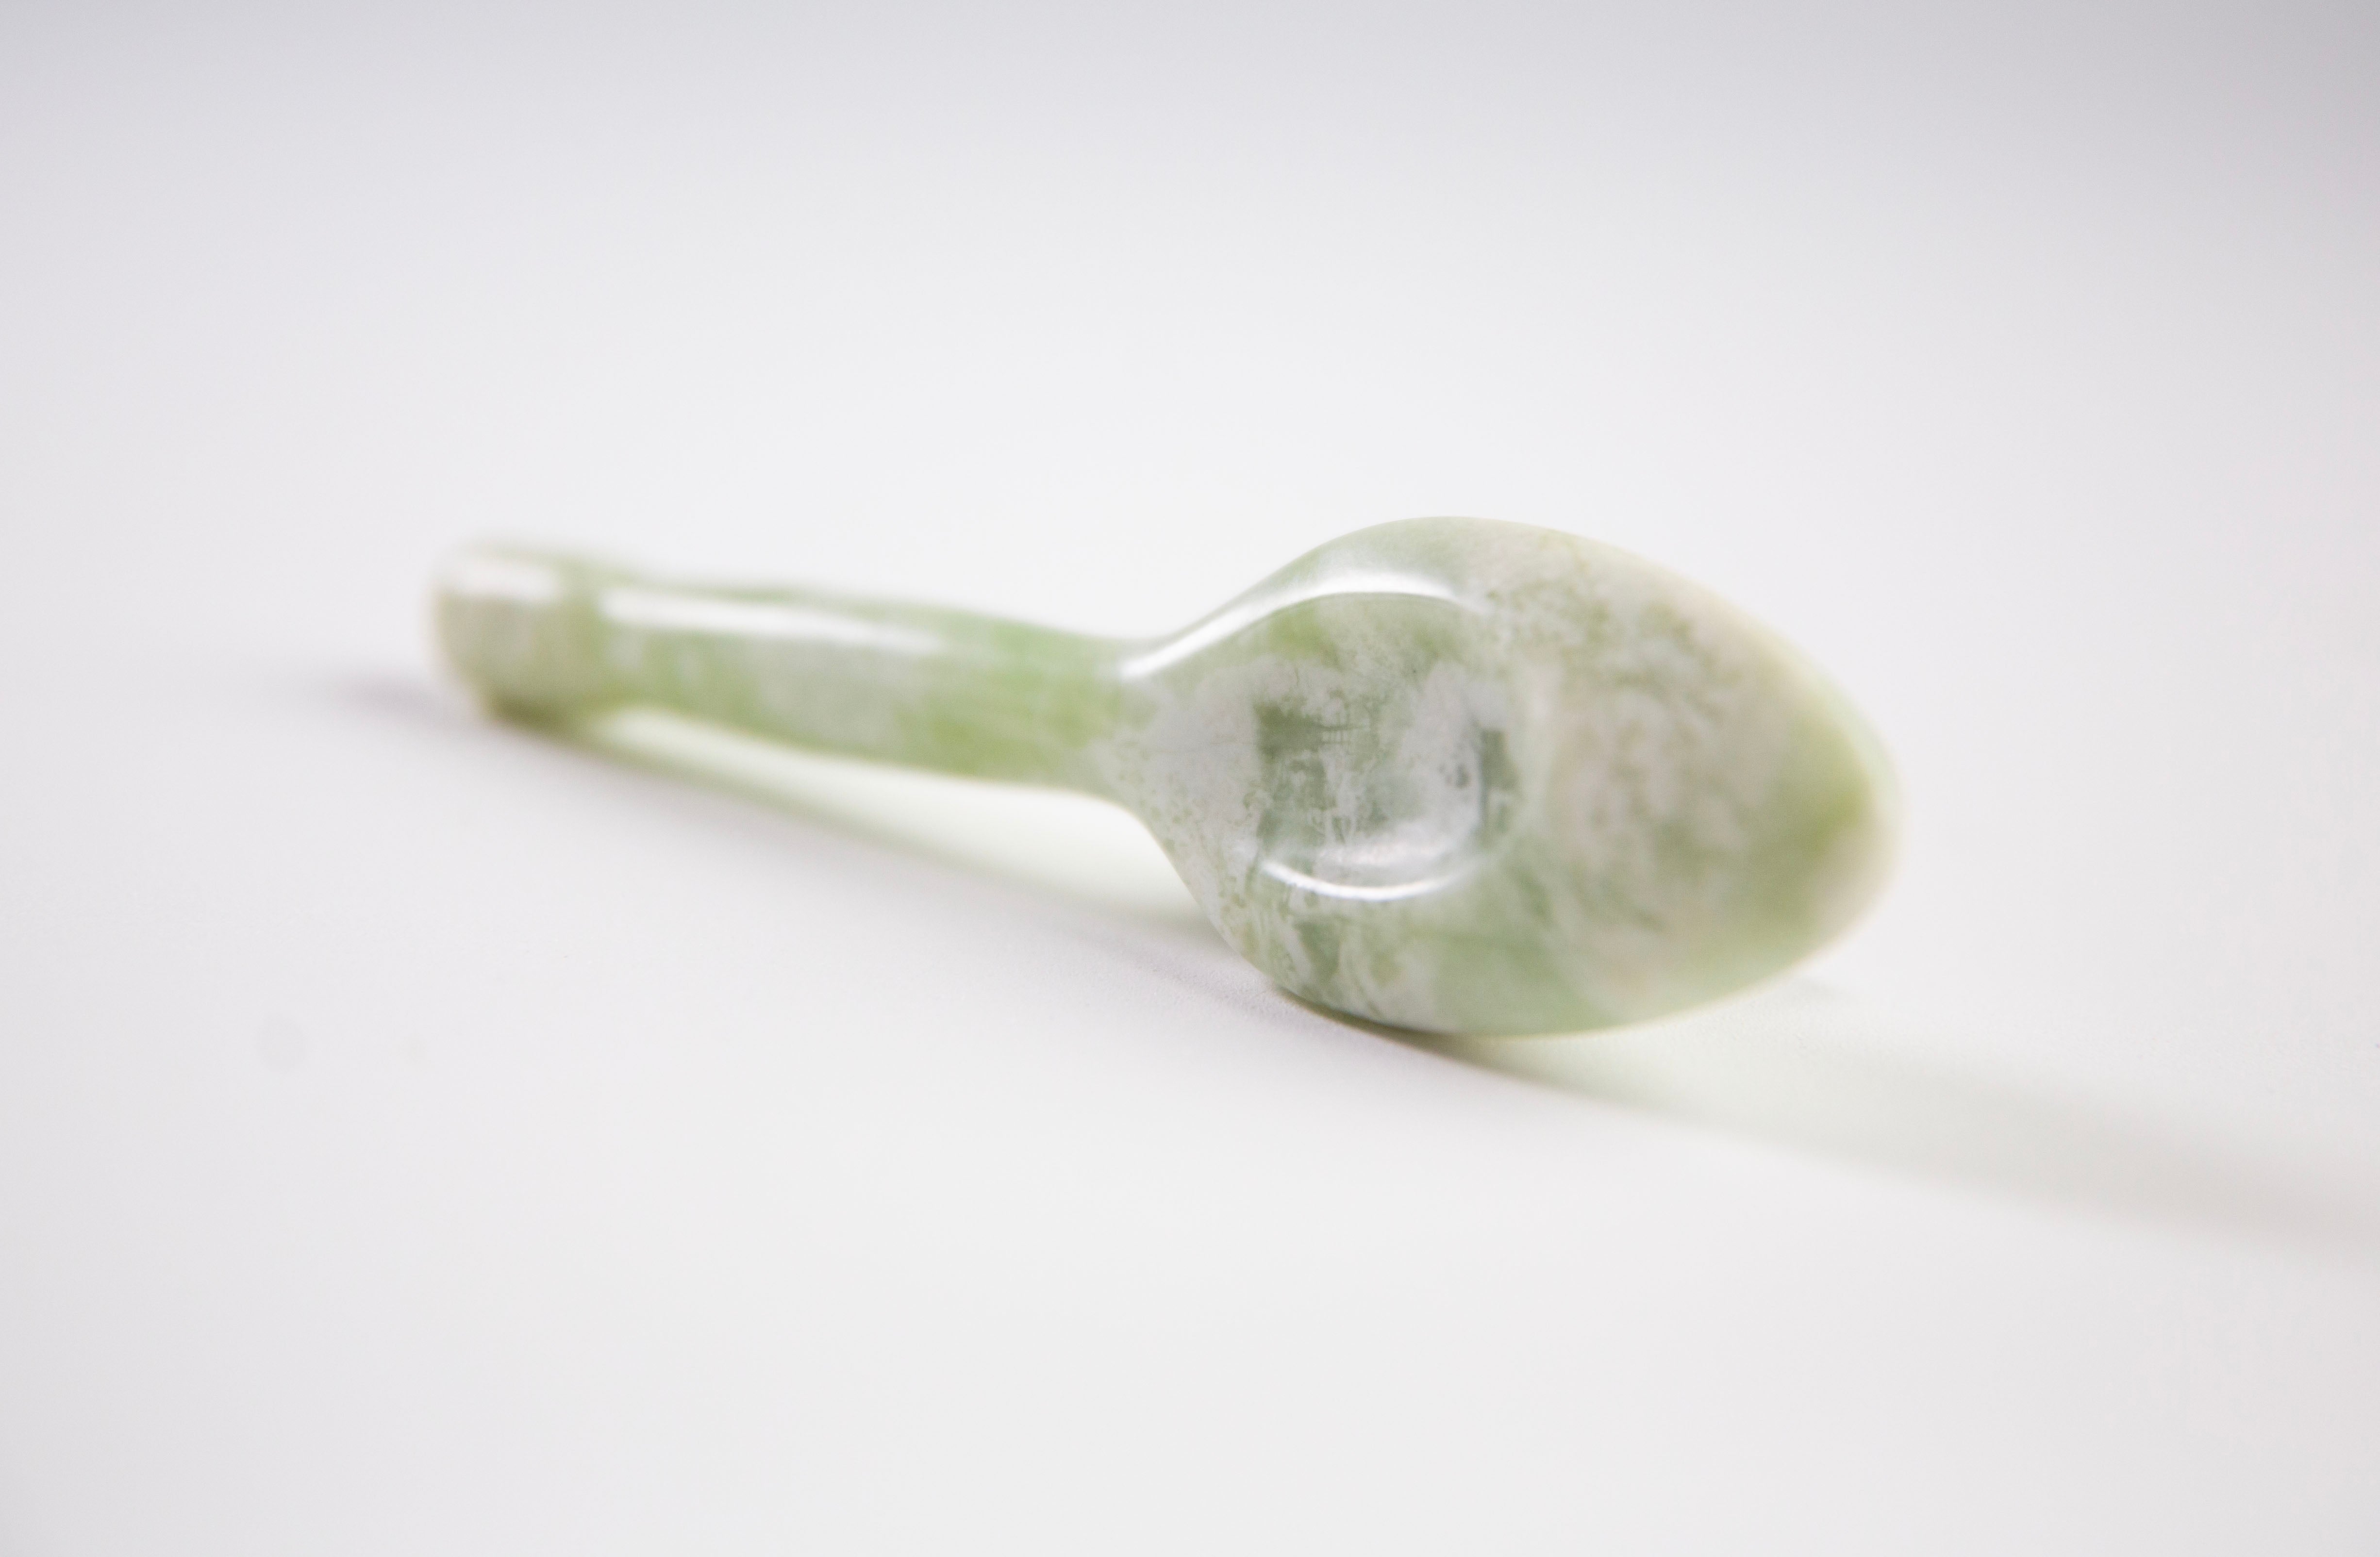 White and Green Jade Spoon | The Jade Applicator | ATA Cosmetics